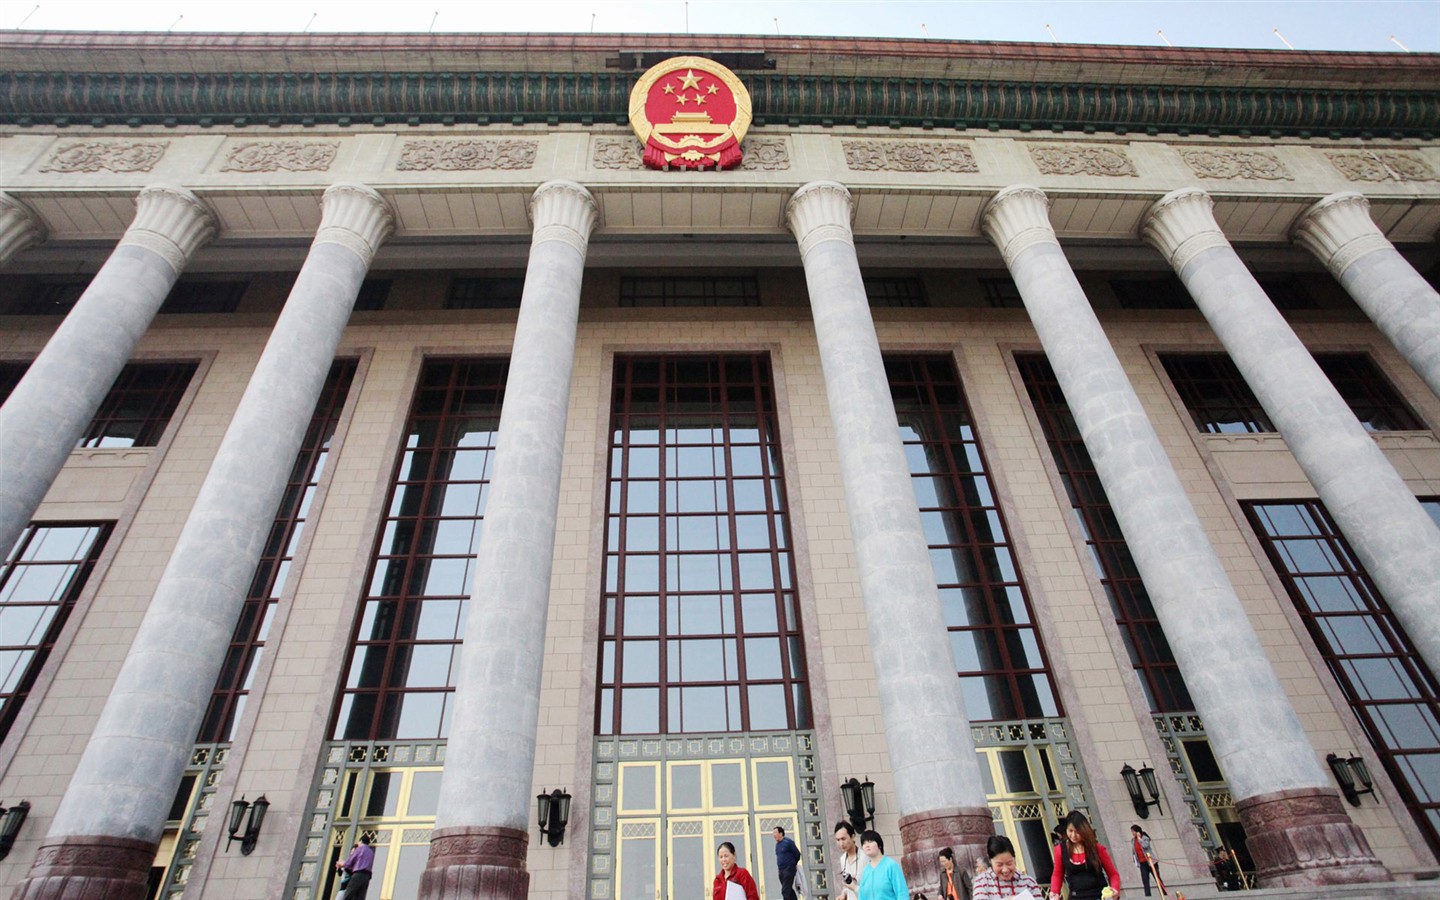 Beijing Tour - Great Hall (ggc works) #14 - 1440x900